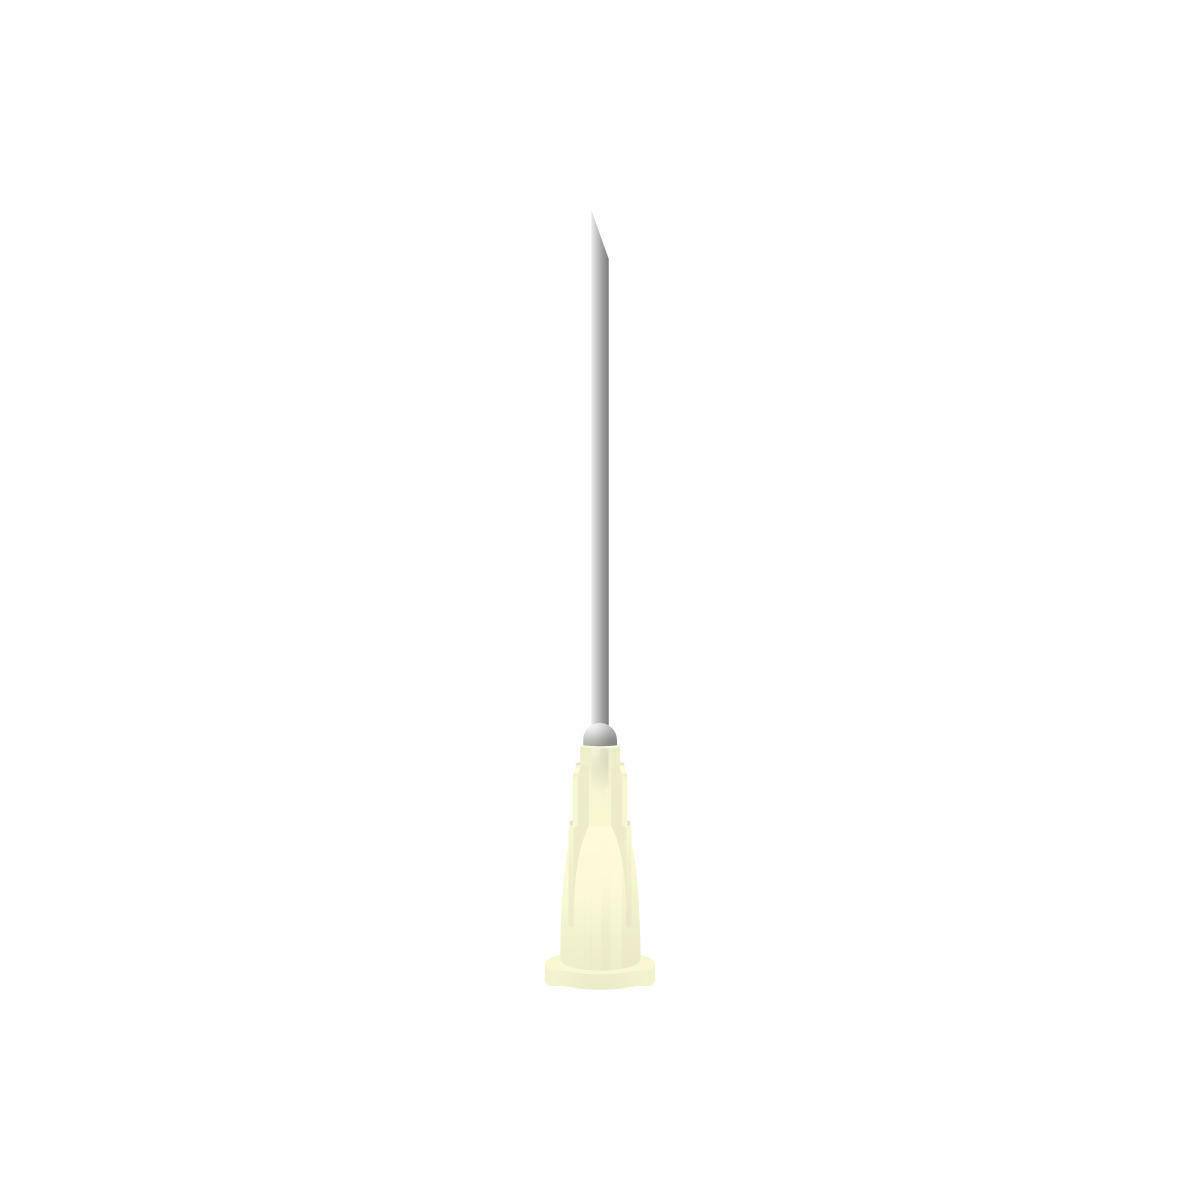 16g White 1.5 inch BD Microlance Needles - UKMEDI